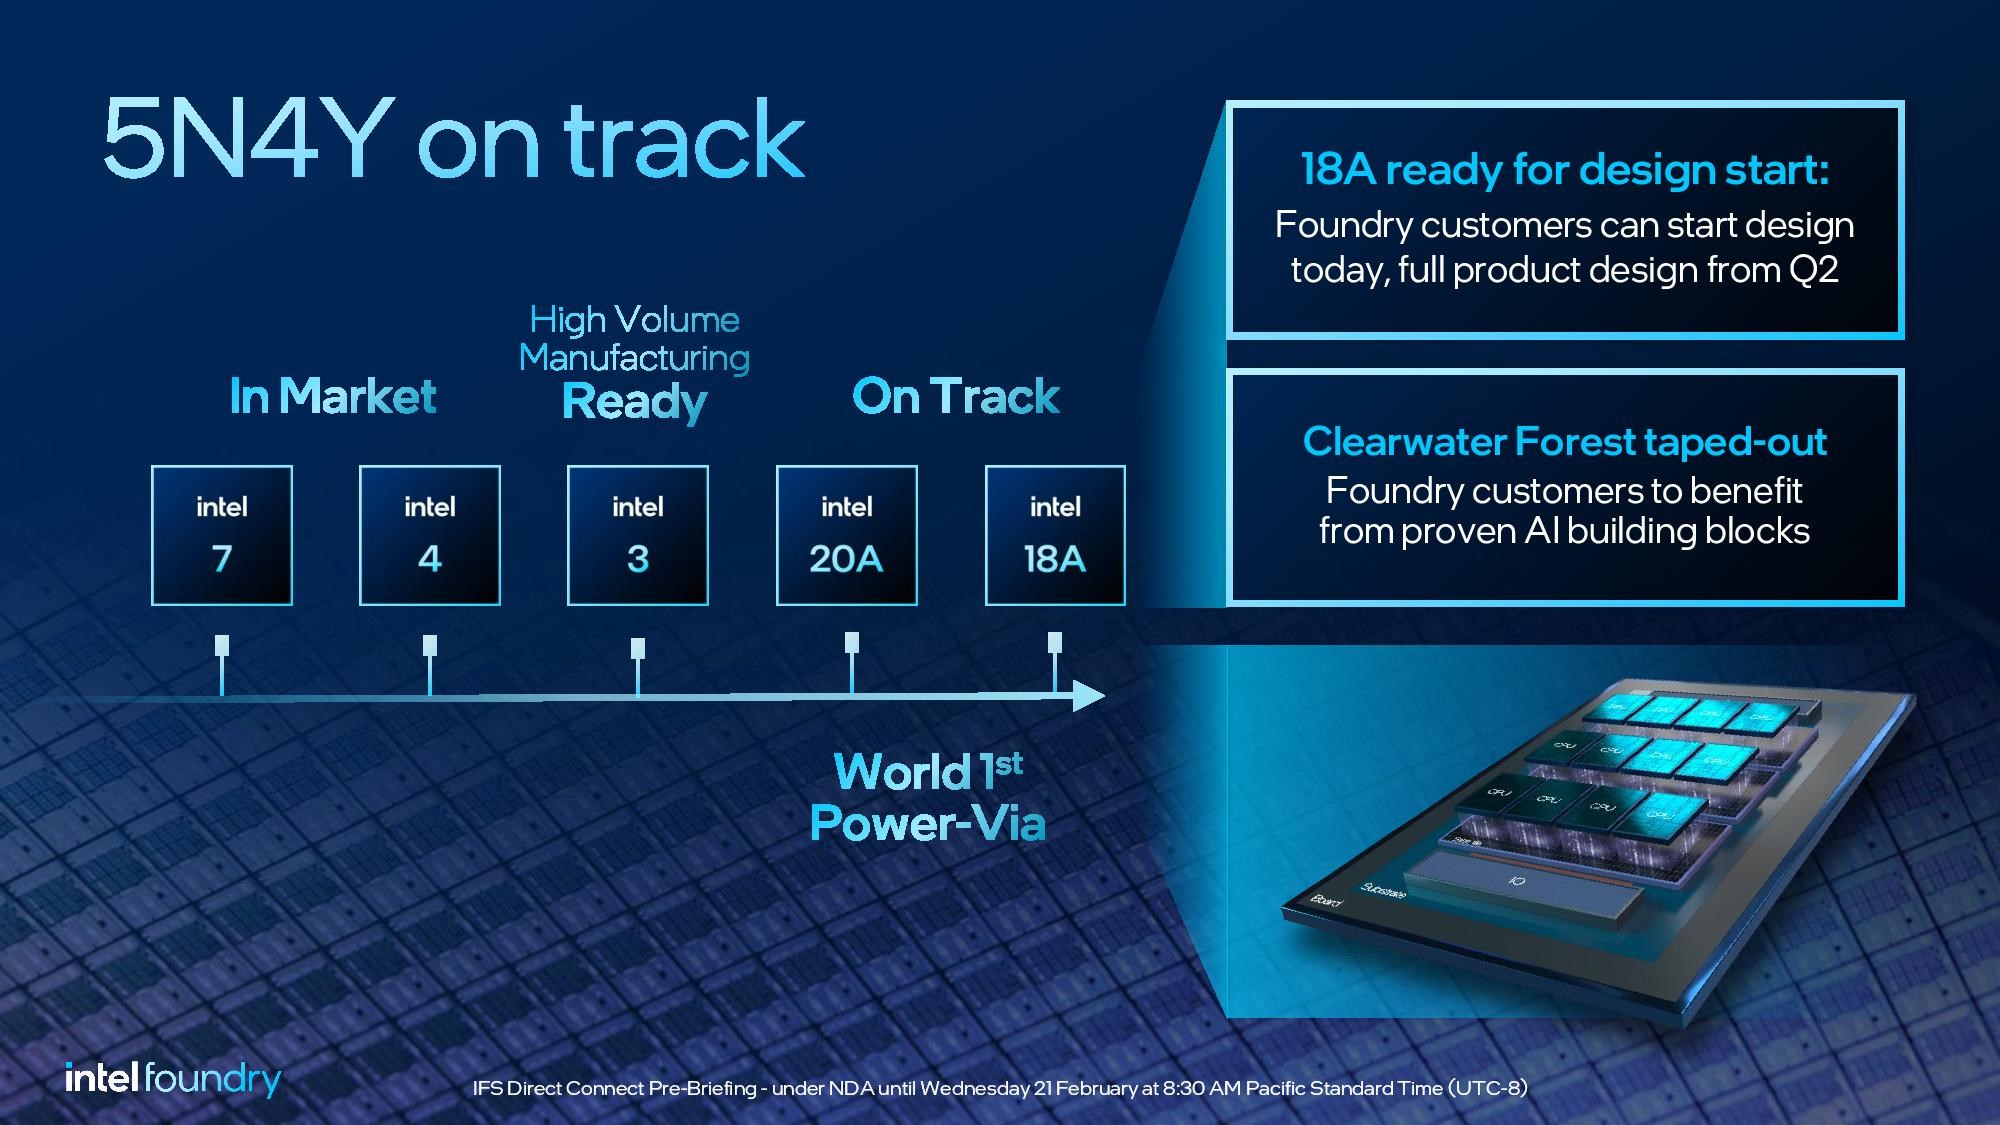 Intel artık zirvede: Intel 18A, 14A, Intel 3 yeni yol haritası